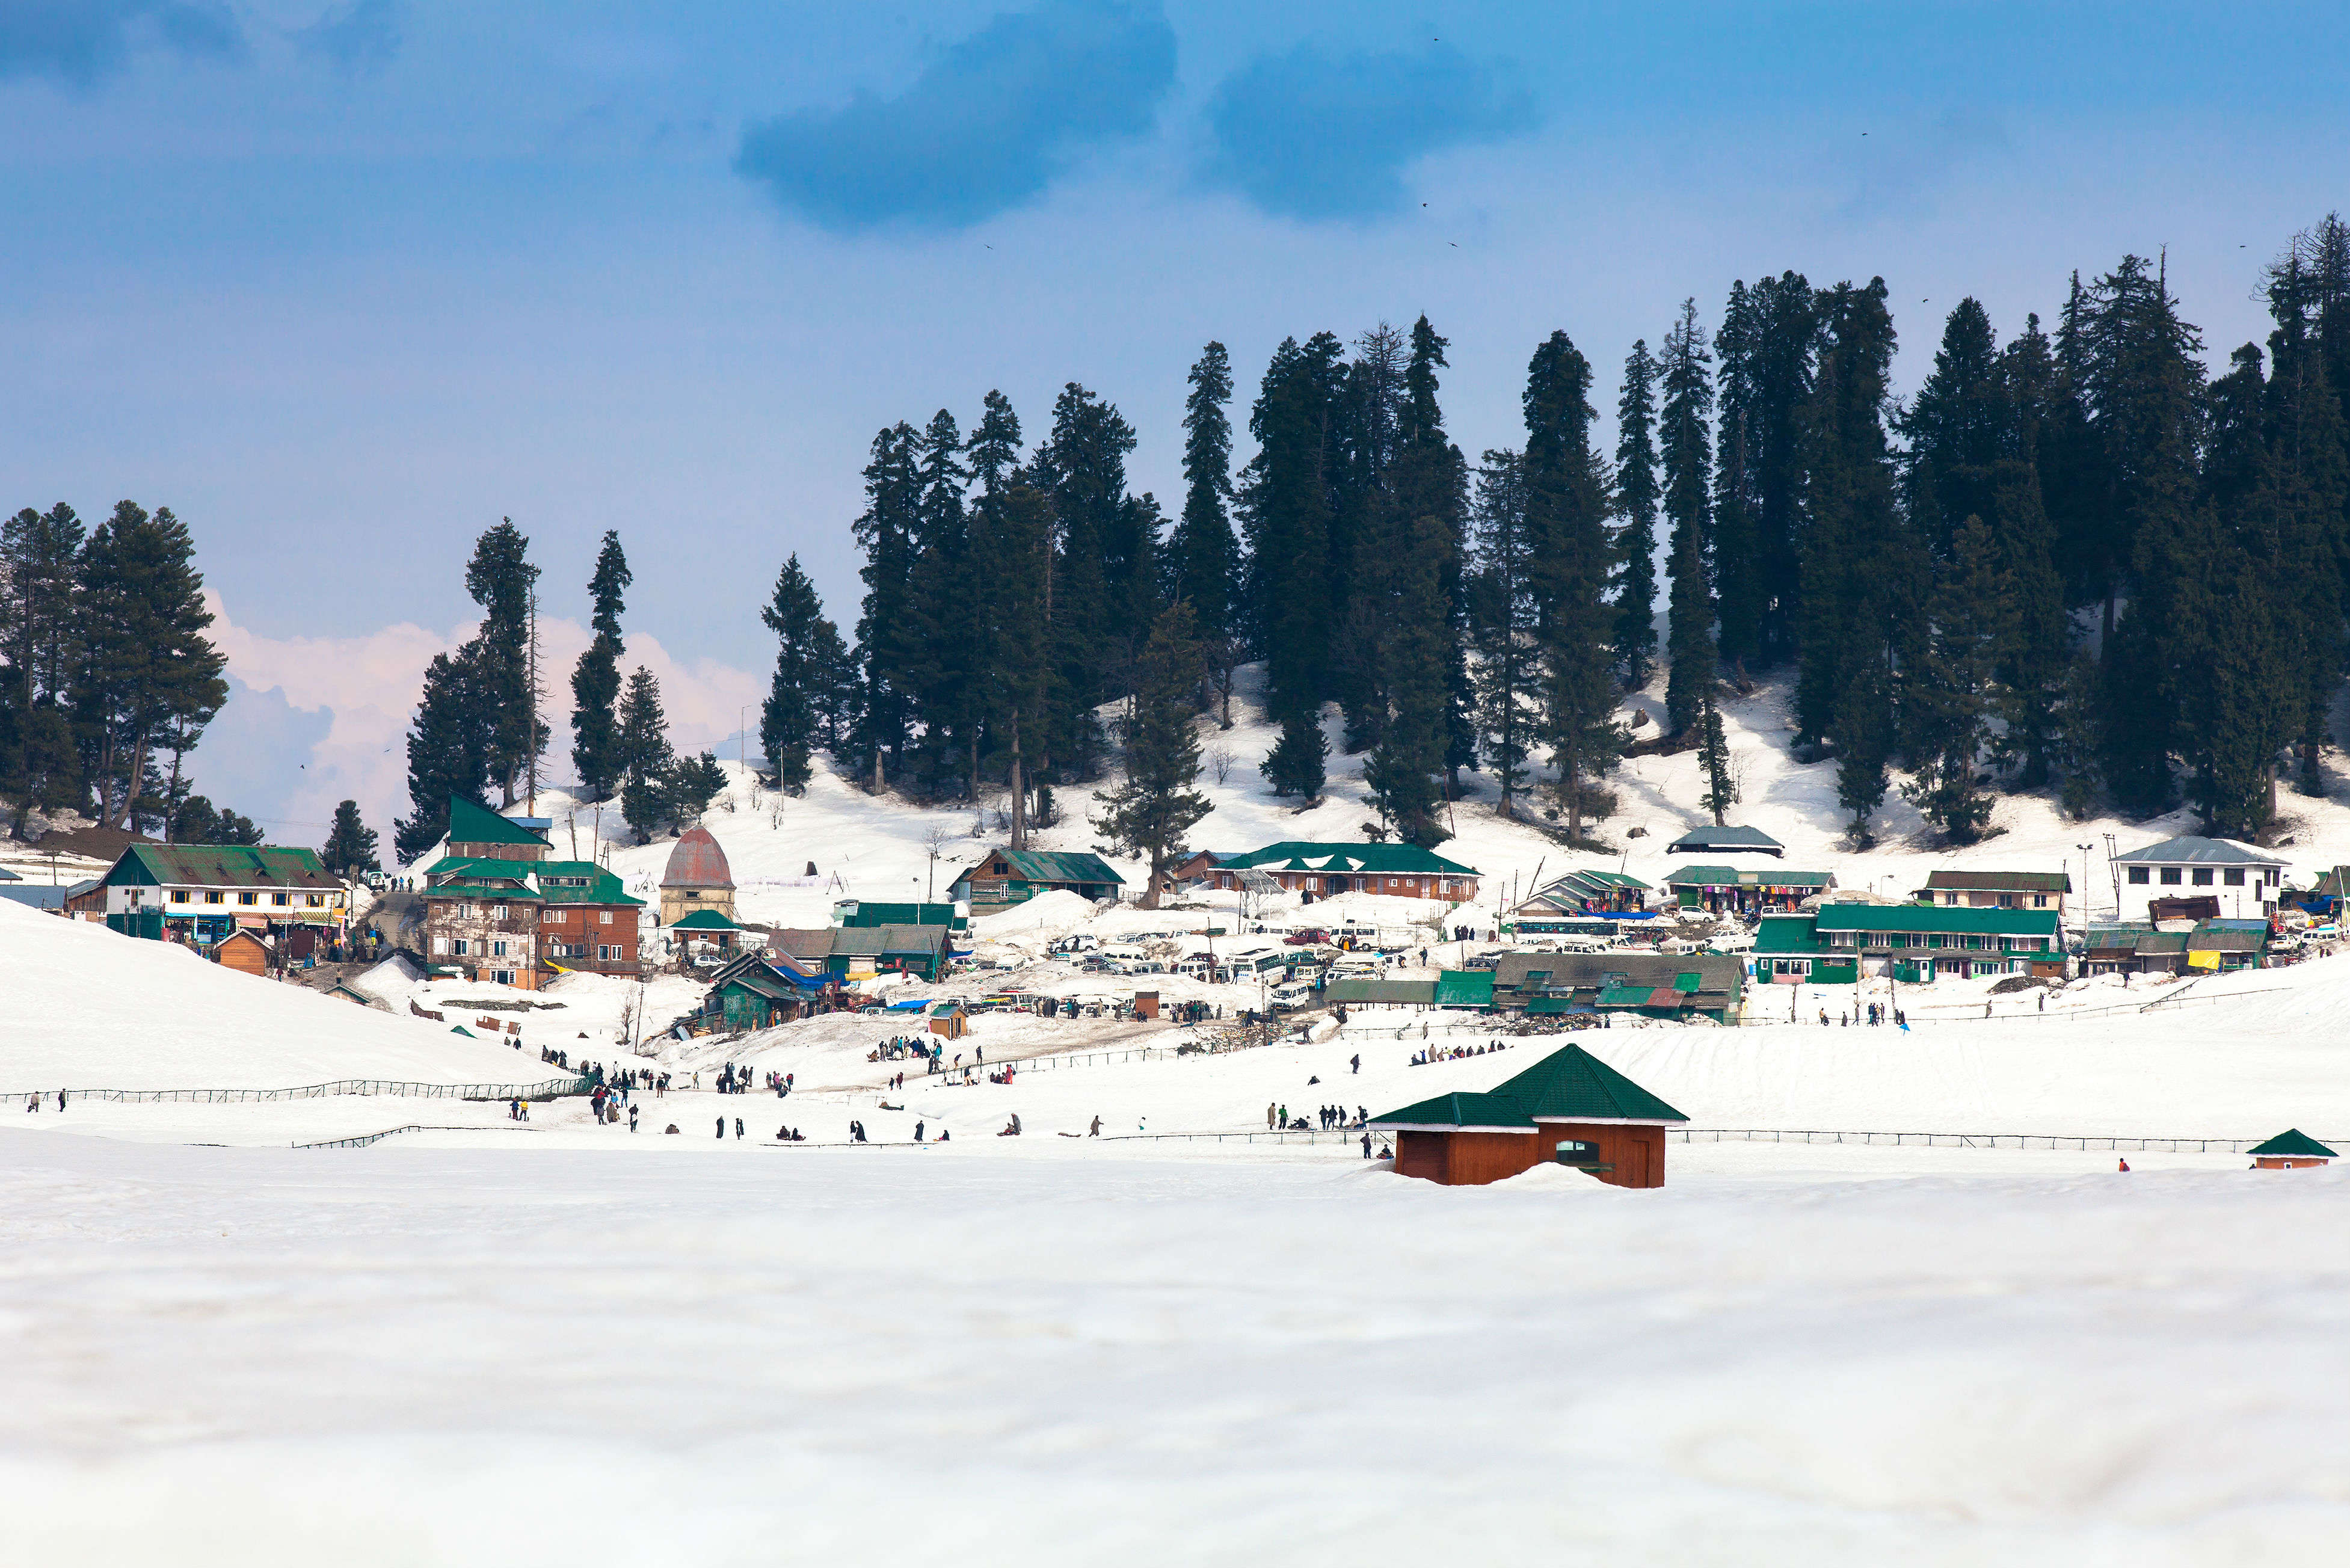 Kashmir records a full house this winter season